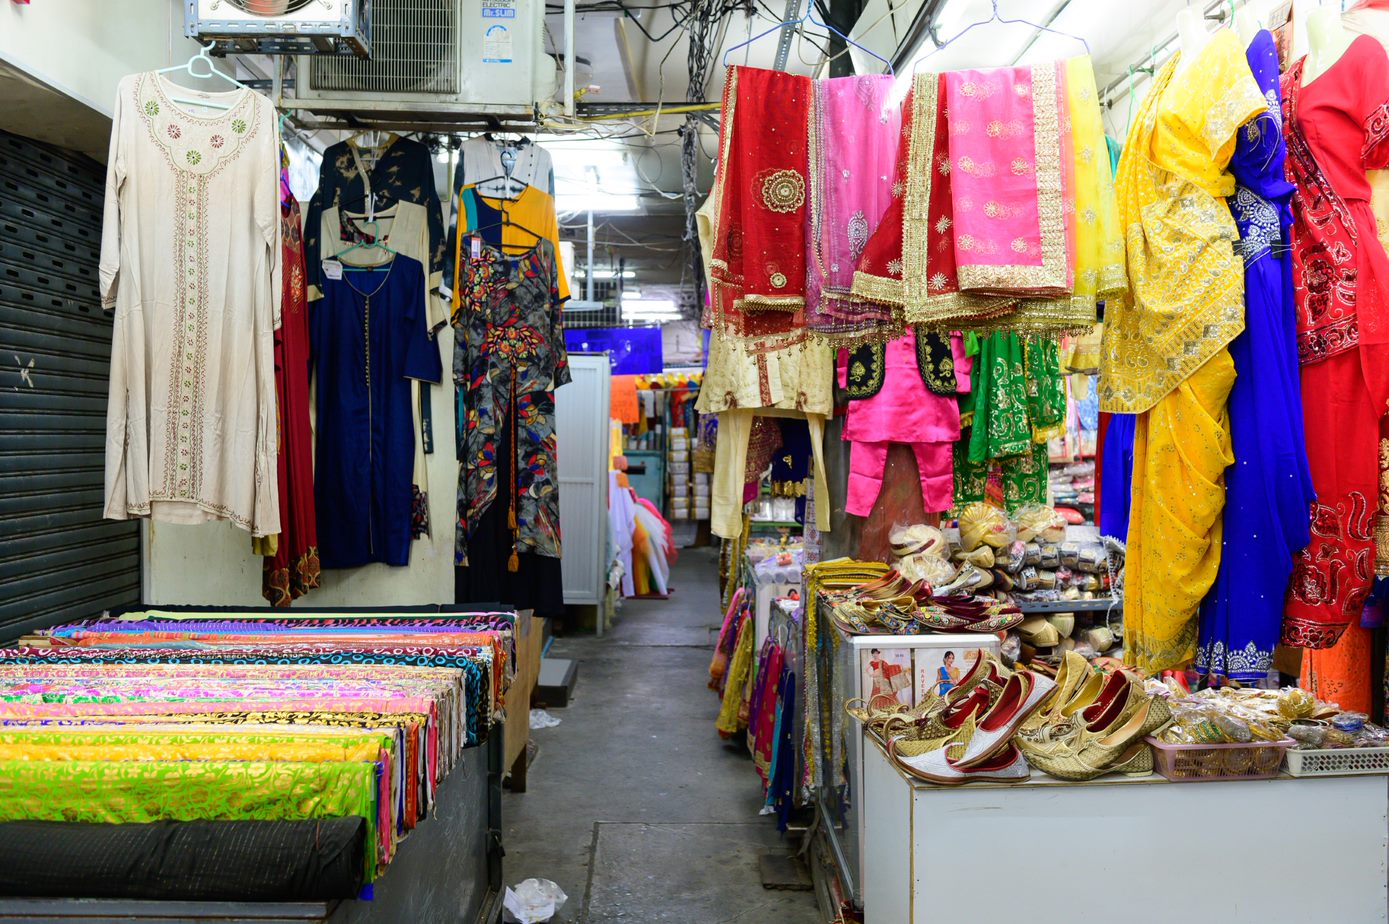 Indian Emporium-Pahurat Bangkok, This is a mall in Bangkok …